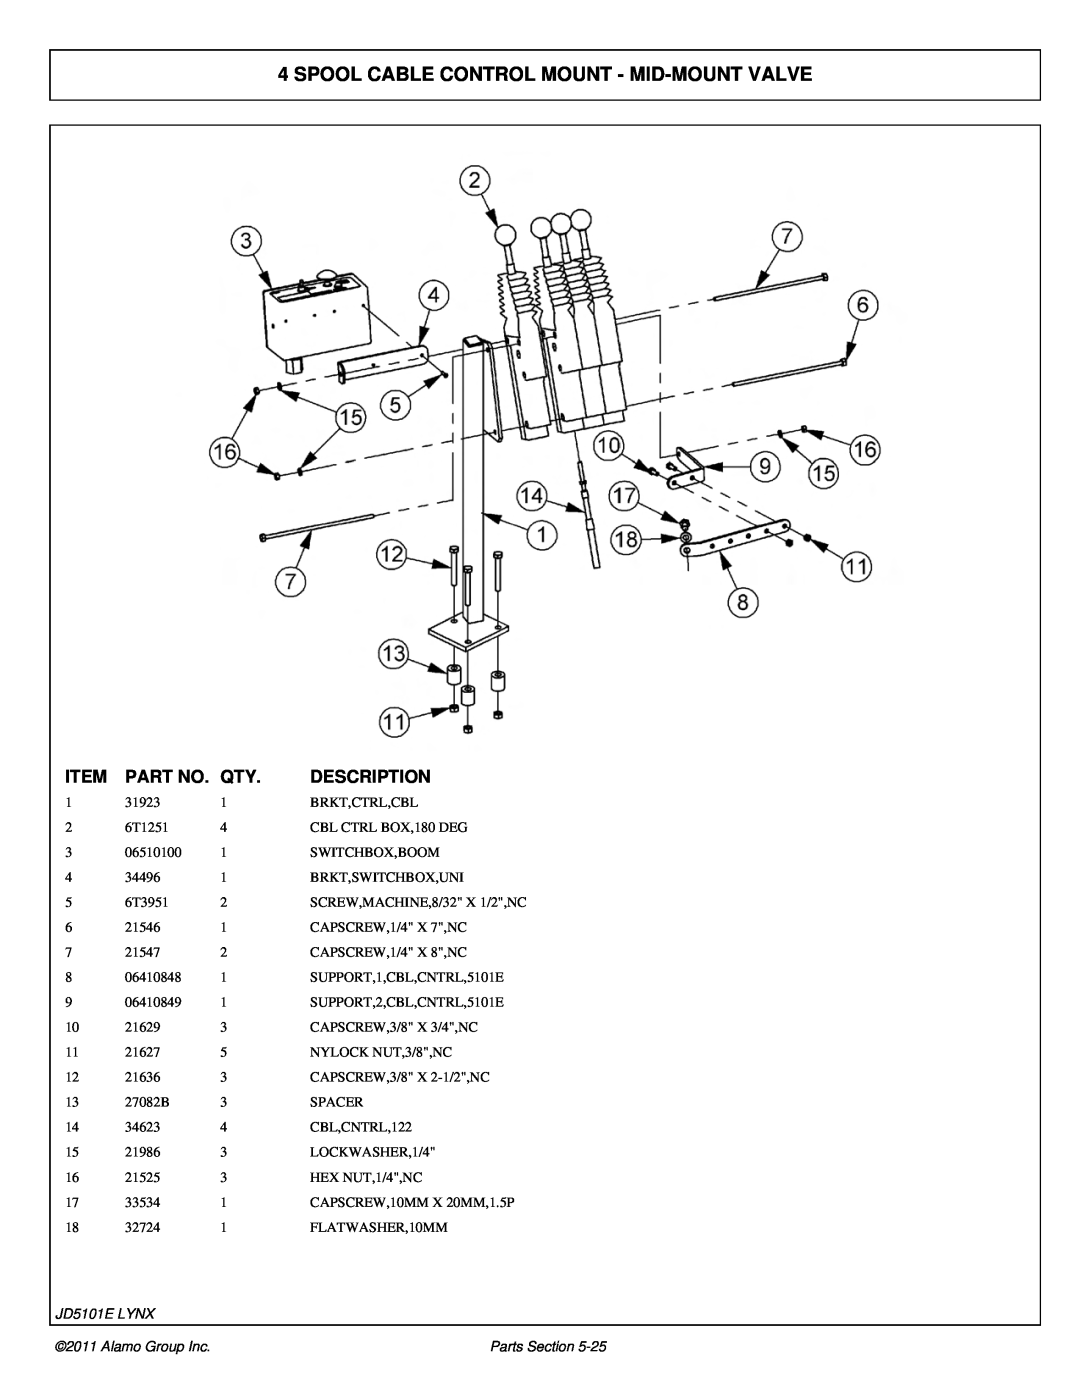 Tiger Products Co., Ltd 5083E, 5093E Spool Cable Control Mount - Mid-Mountvalve, Item, Part No, Description, JD5101E LYNX 